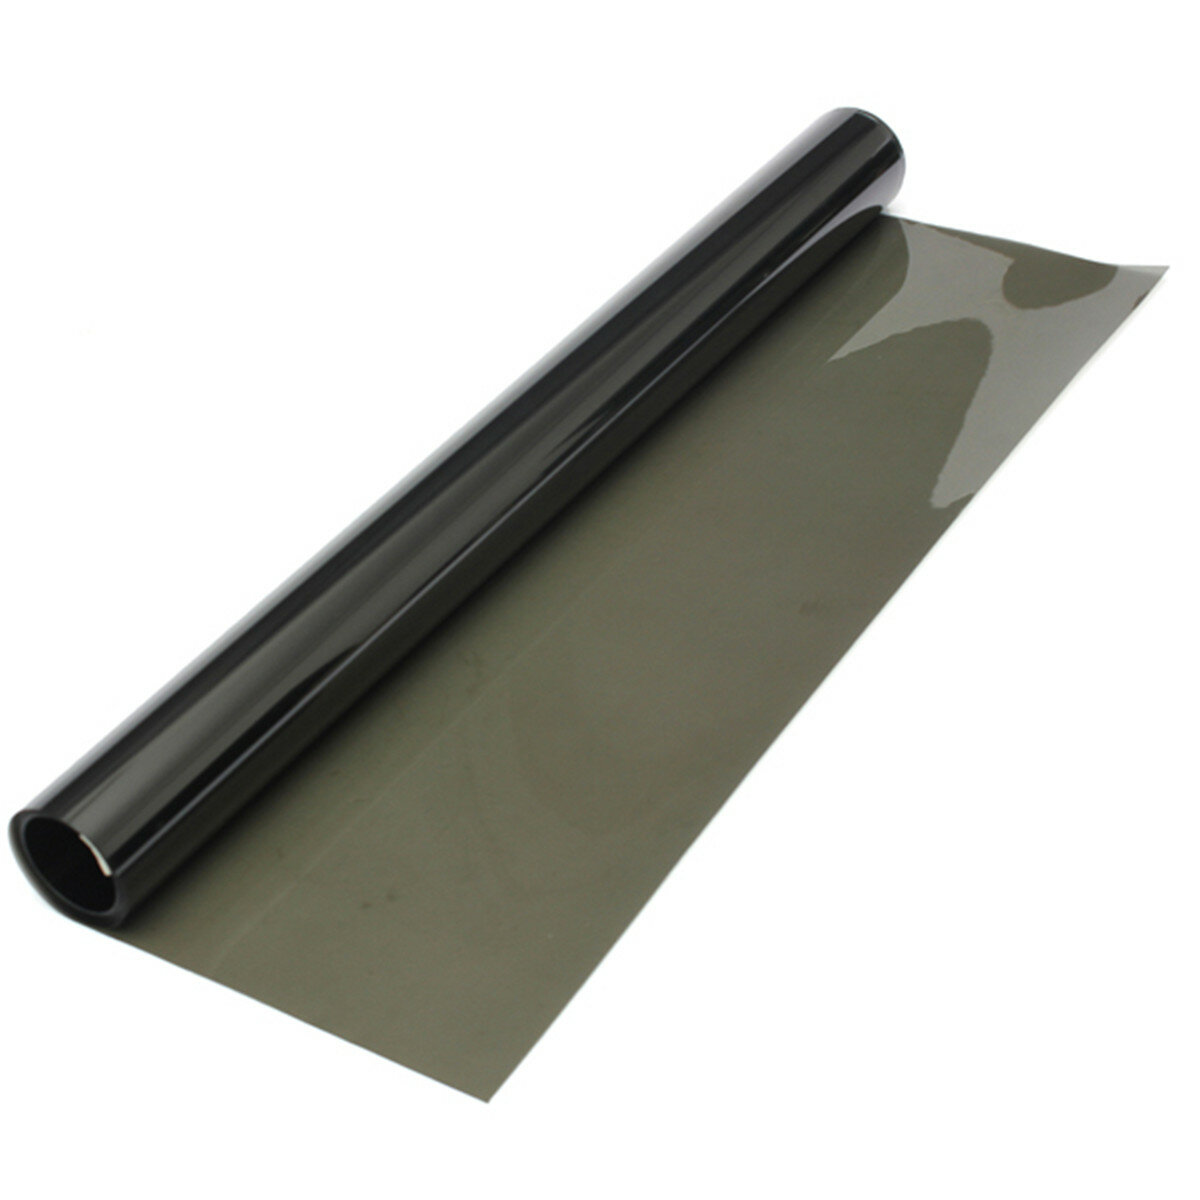 Window Tint Film Black 30% 50cm X 6m Roll 2 PLY Car Auto House Commercial